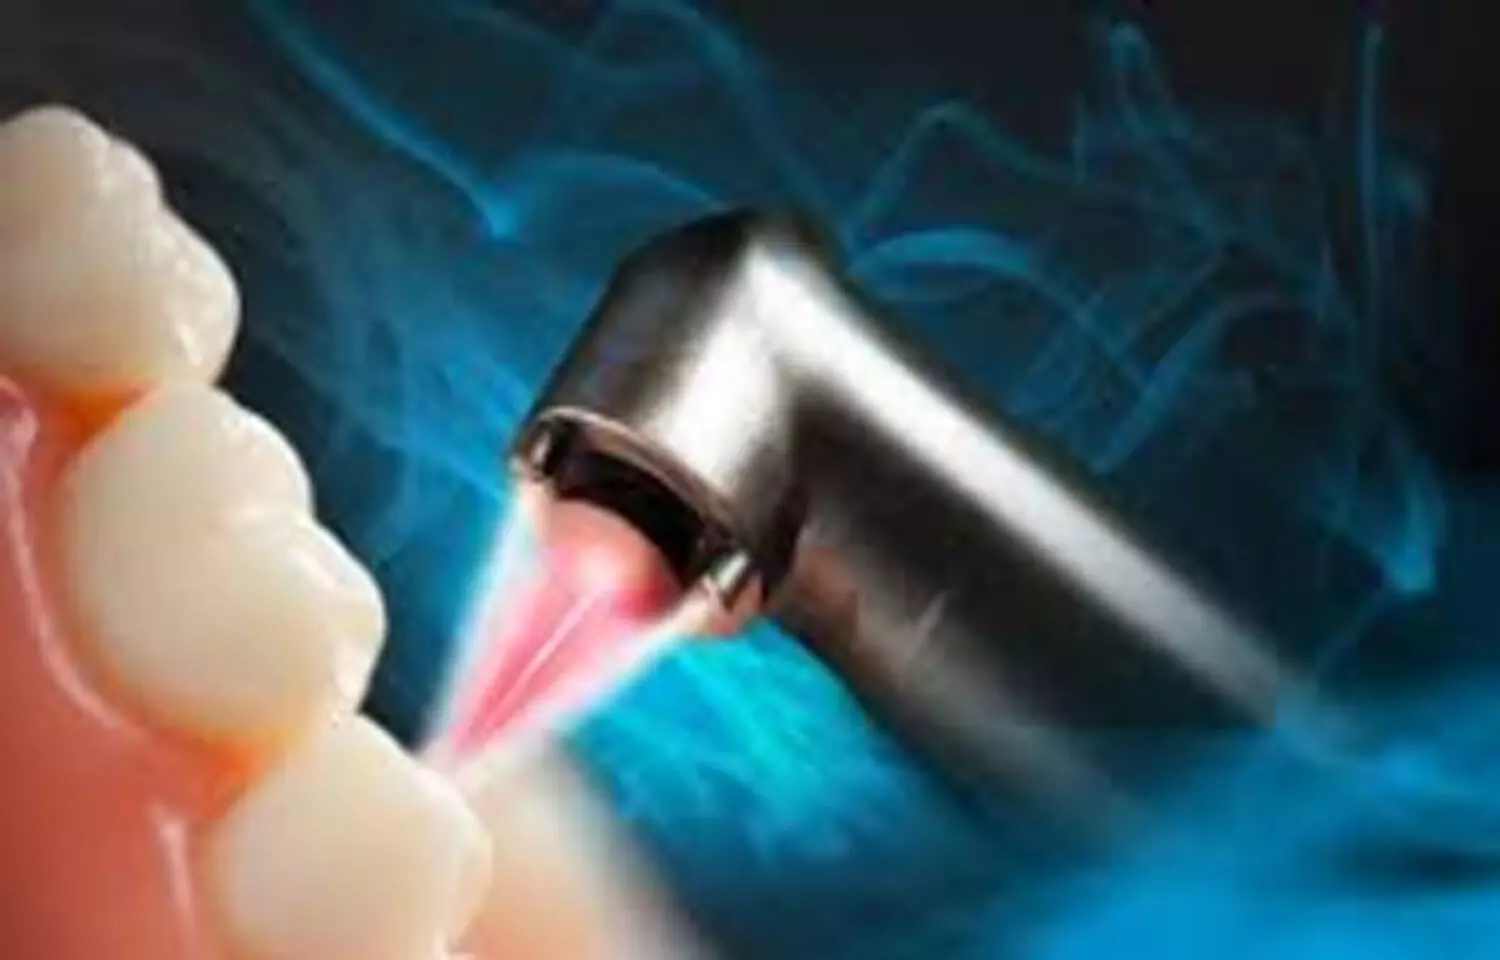 YSGG laser effective for treatment of lip melanin hyperpigmentation, finds study